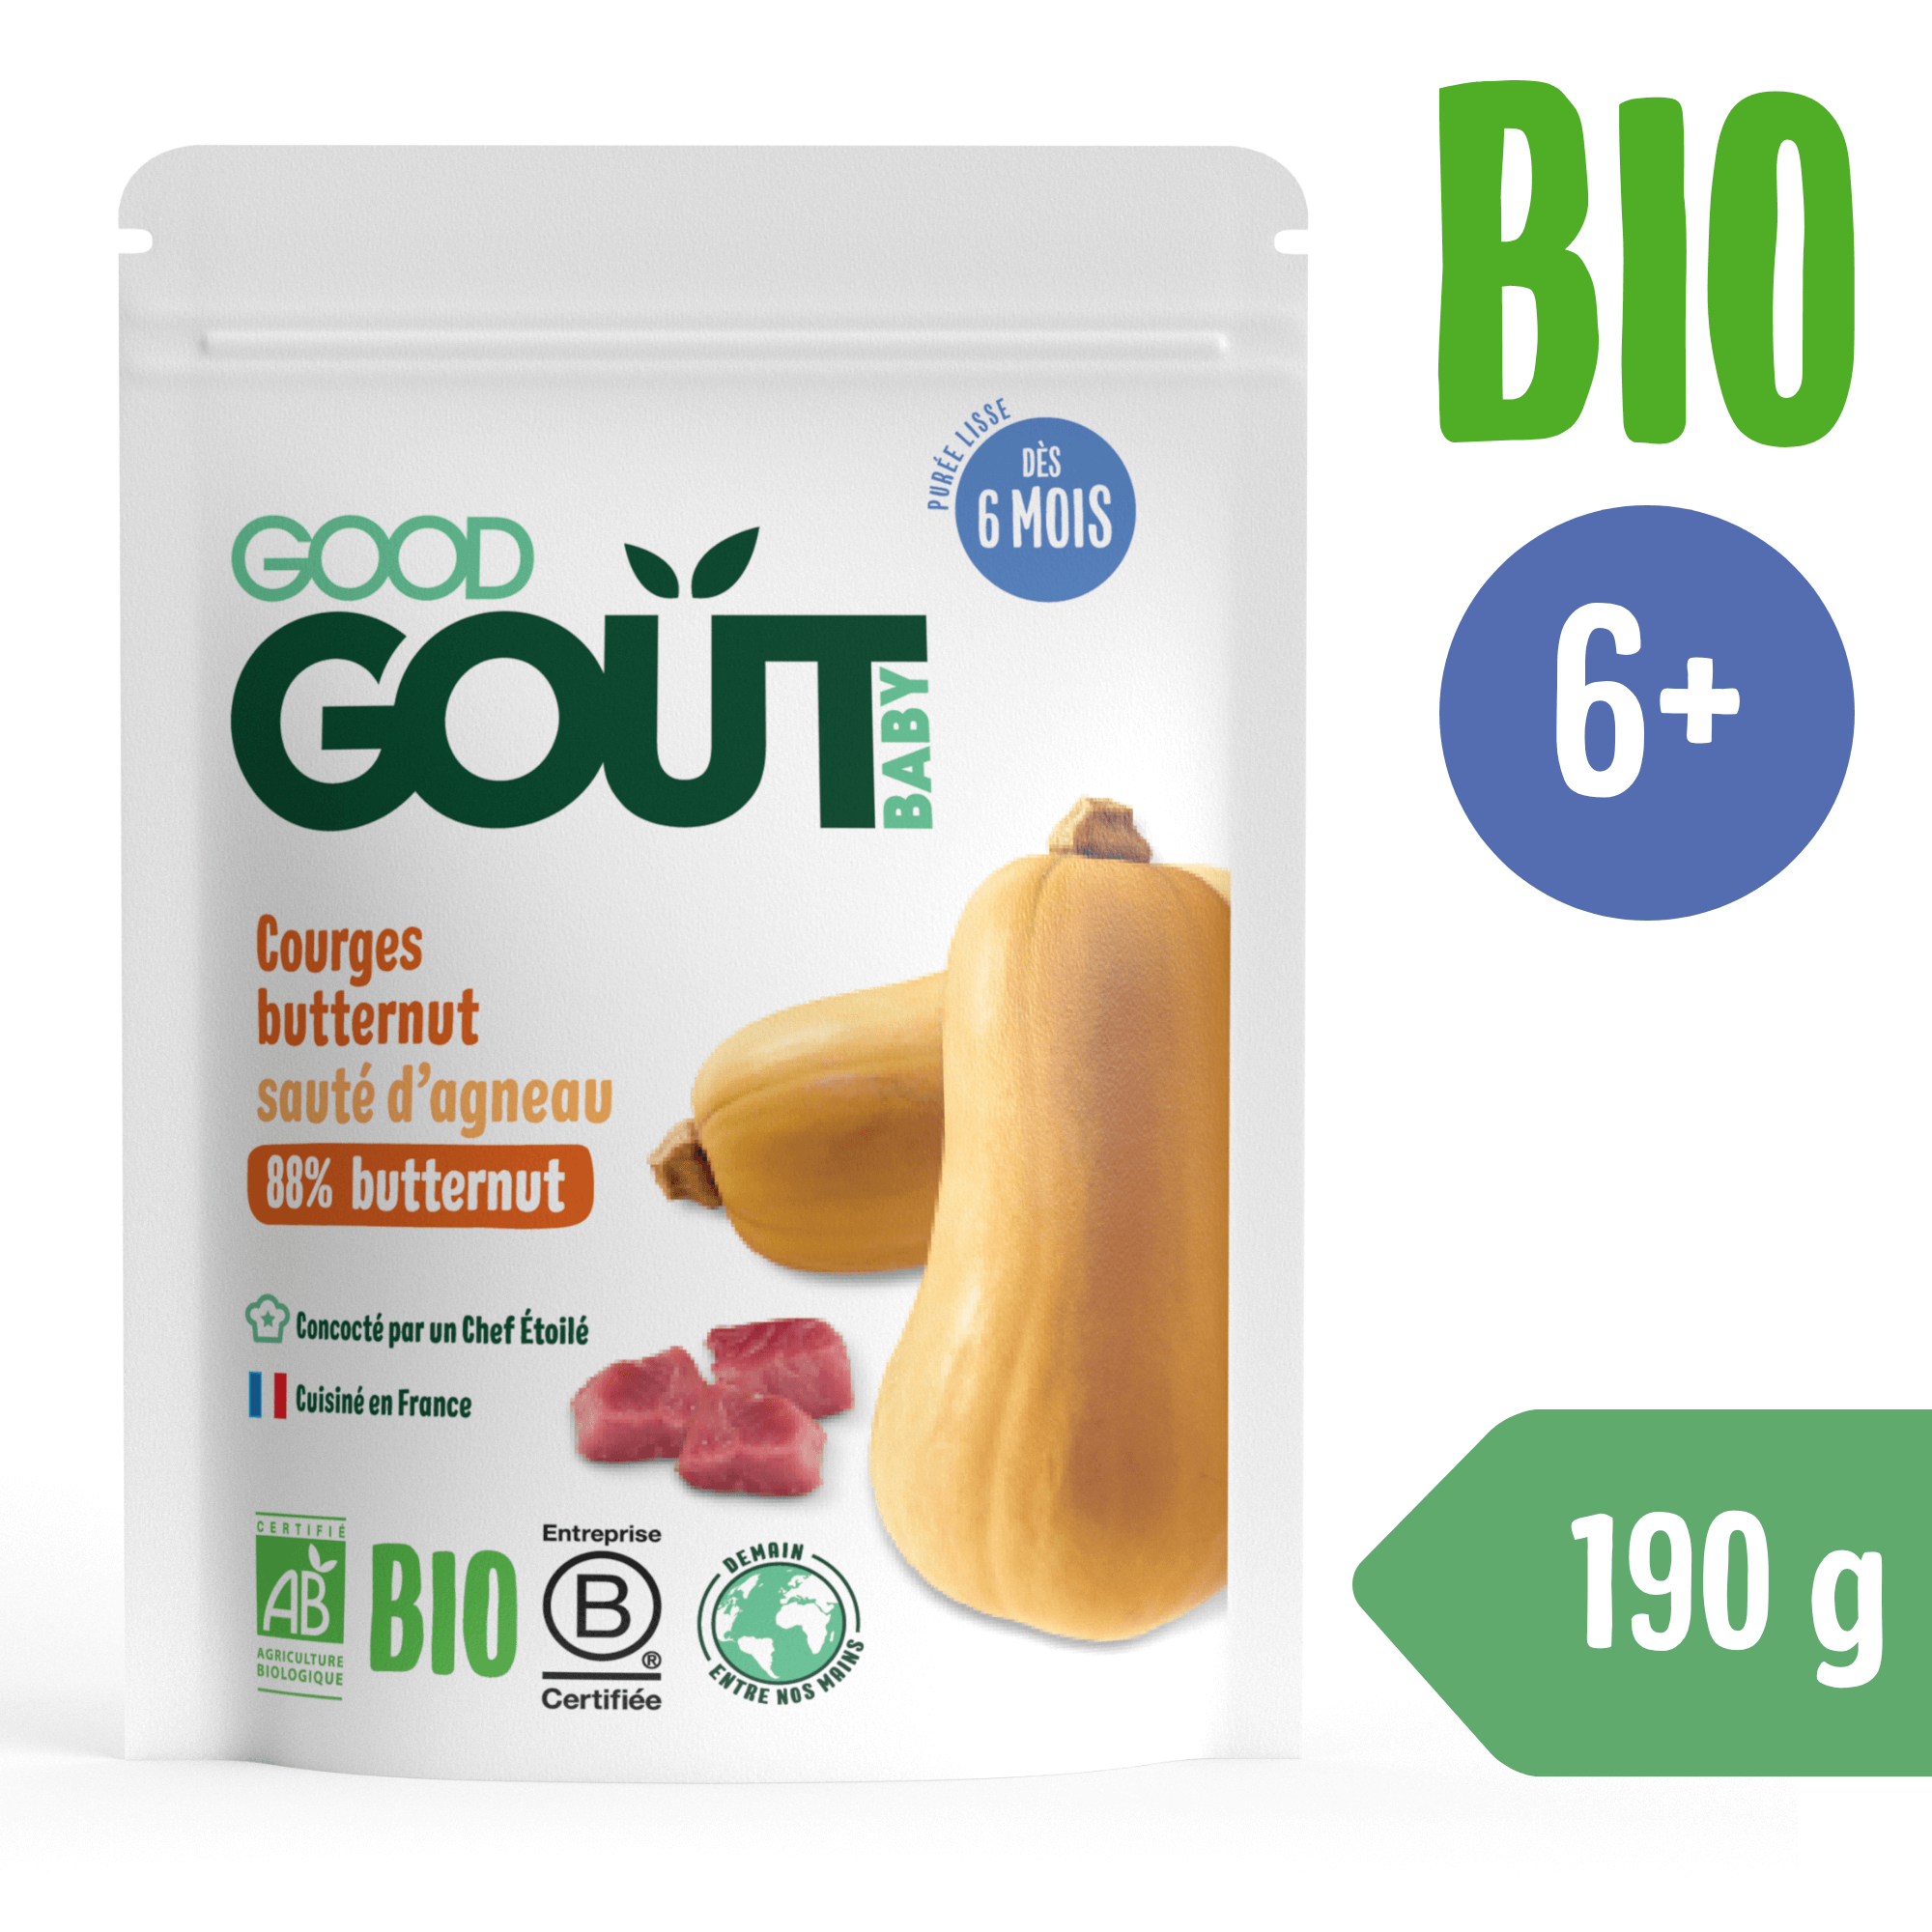 E-shop Good Gout BIO Maslová tekvica s jahňacím mäsom (190 g)